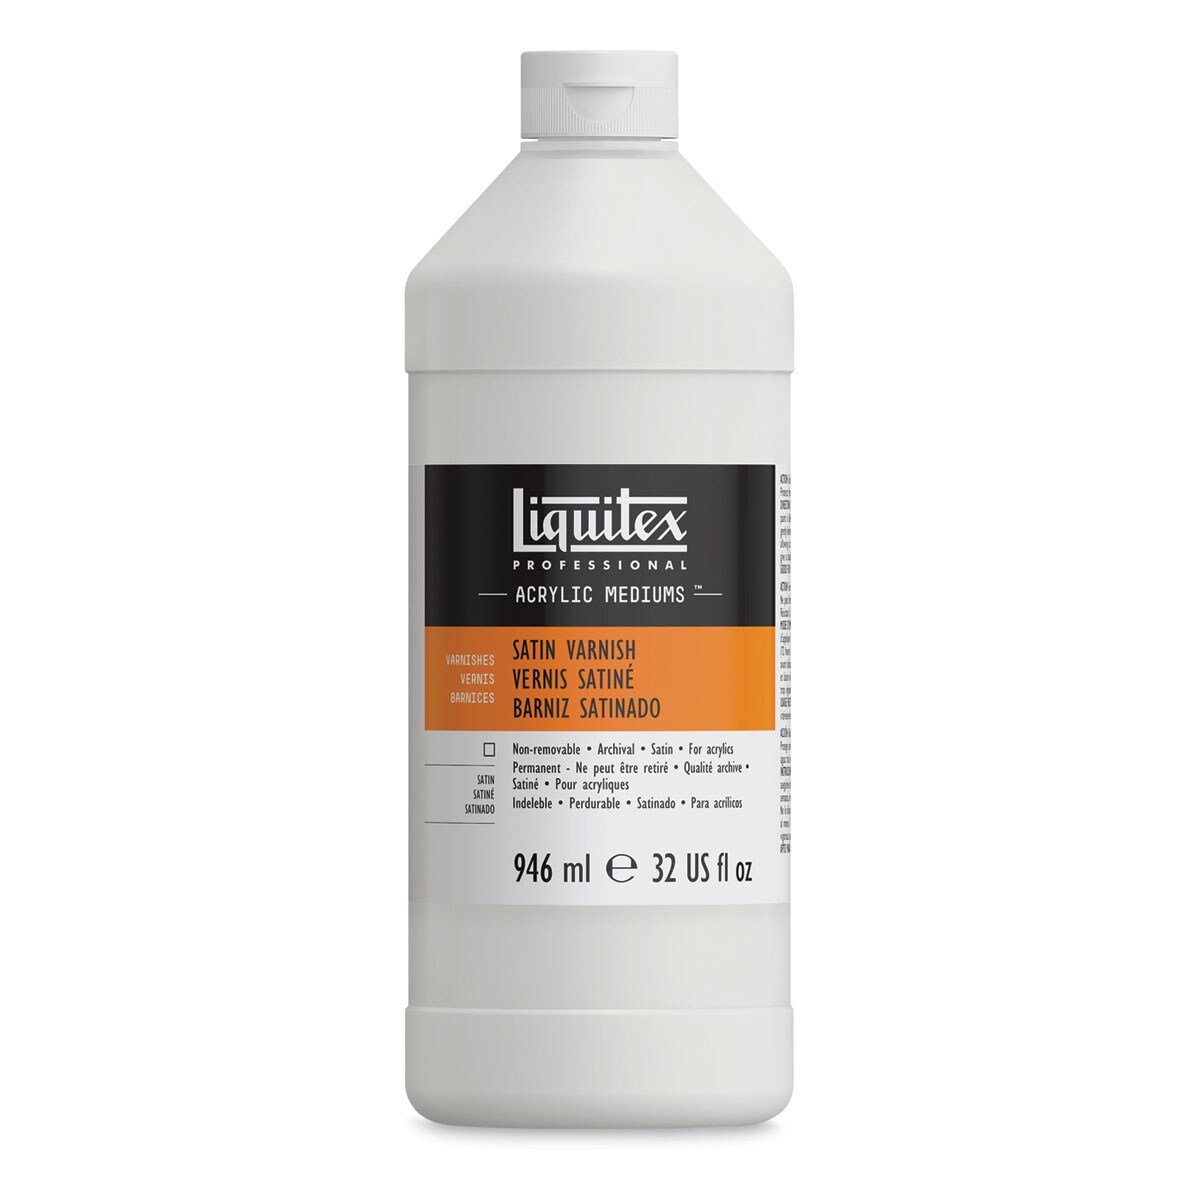 Liquitex Acrylic Varnish - Satin, 32 oz bottle